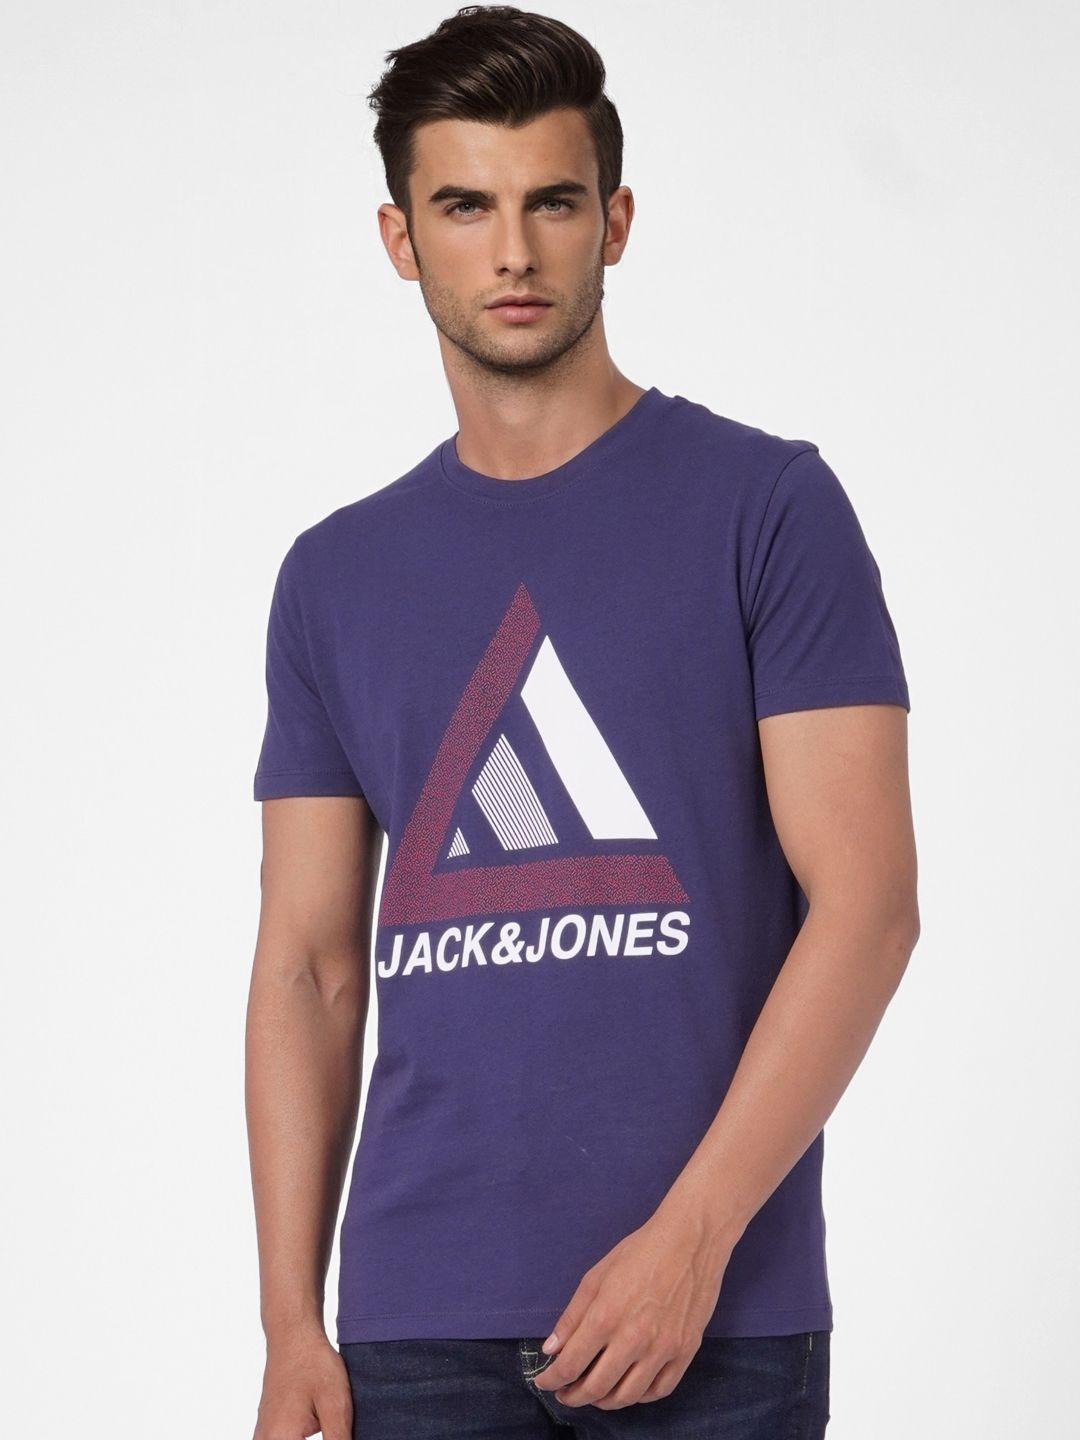 jack & jones men navy blue & white brand logo printed slim fit pure cotton t-shirt